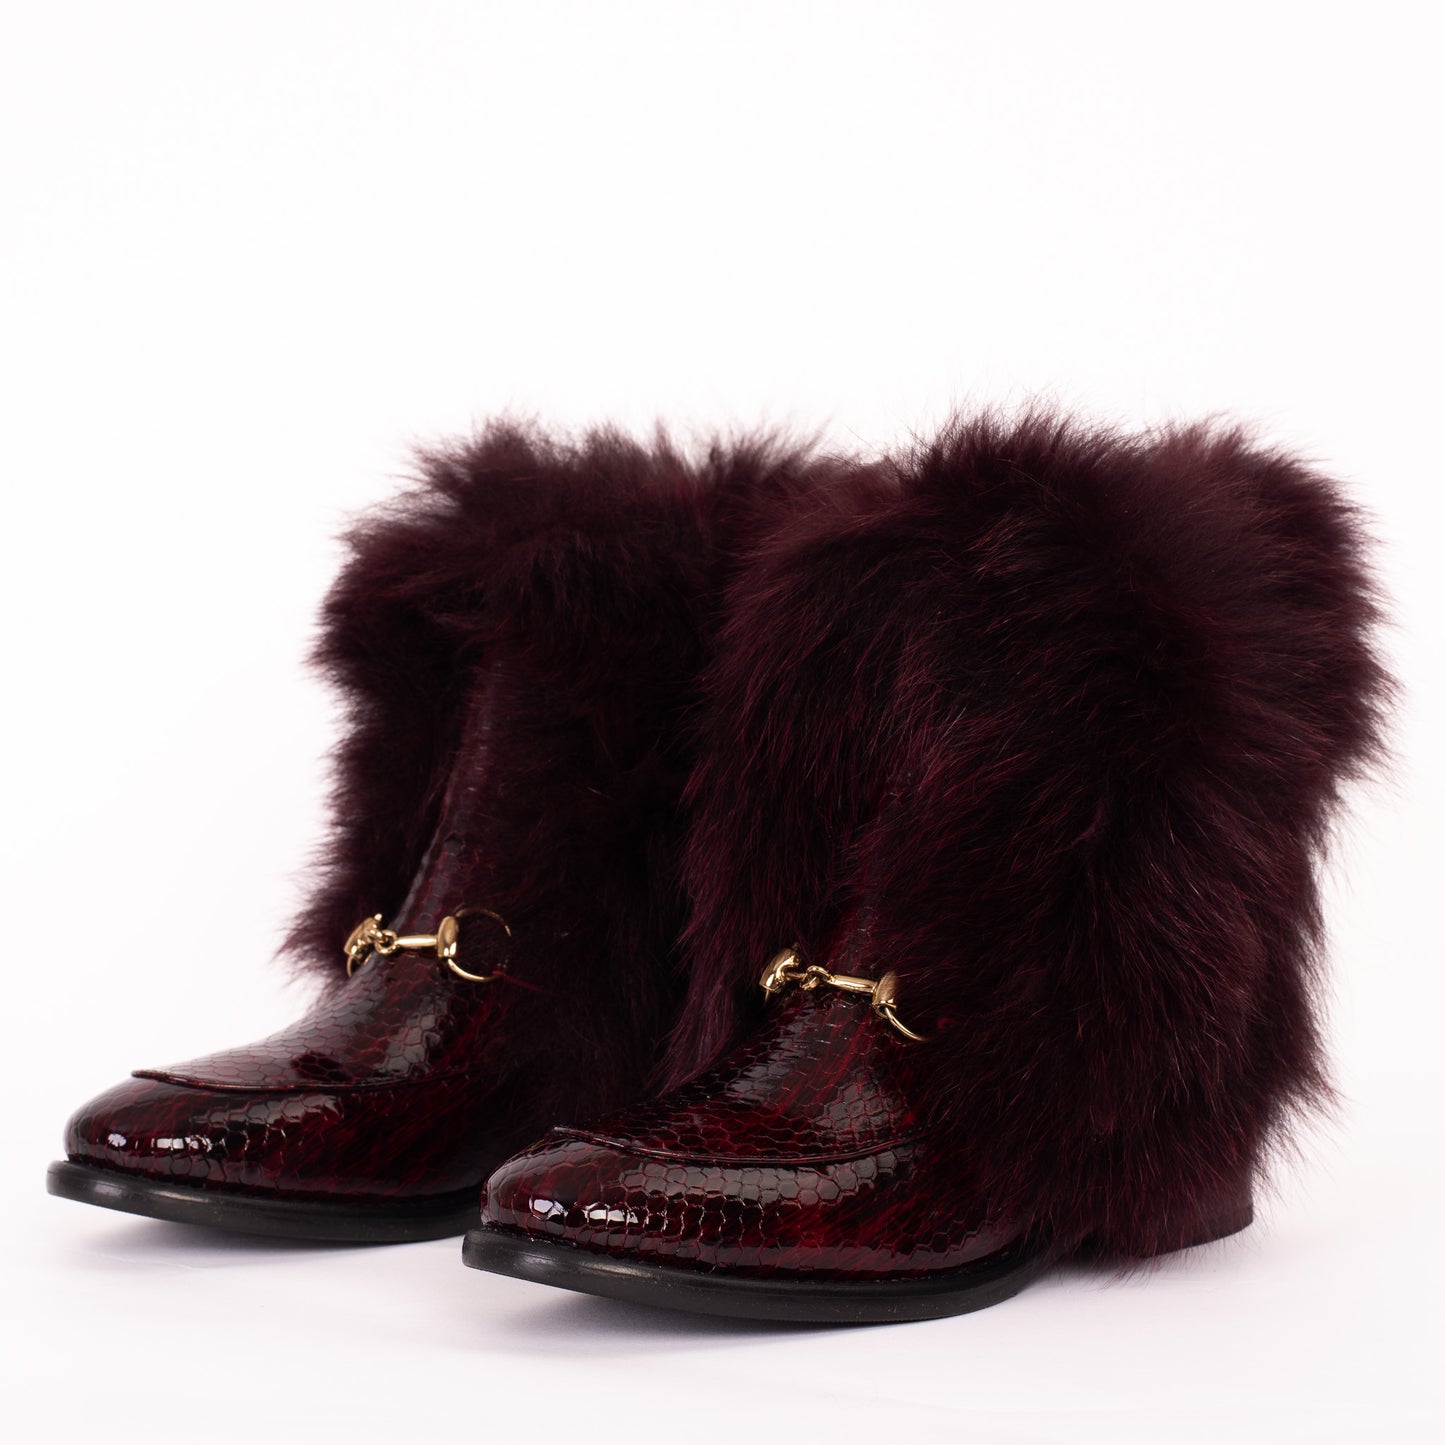 The Izmir Burgundy Patent Leather Natural Fur Mid Calf Women Boot